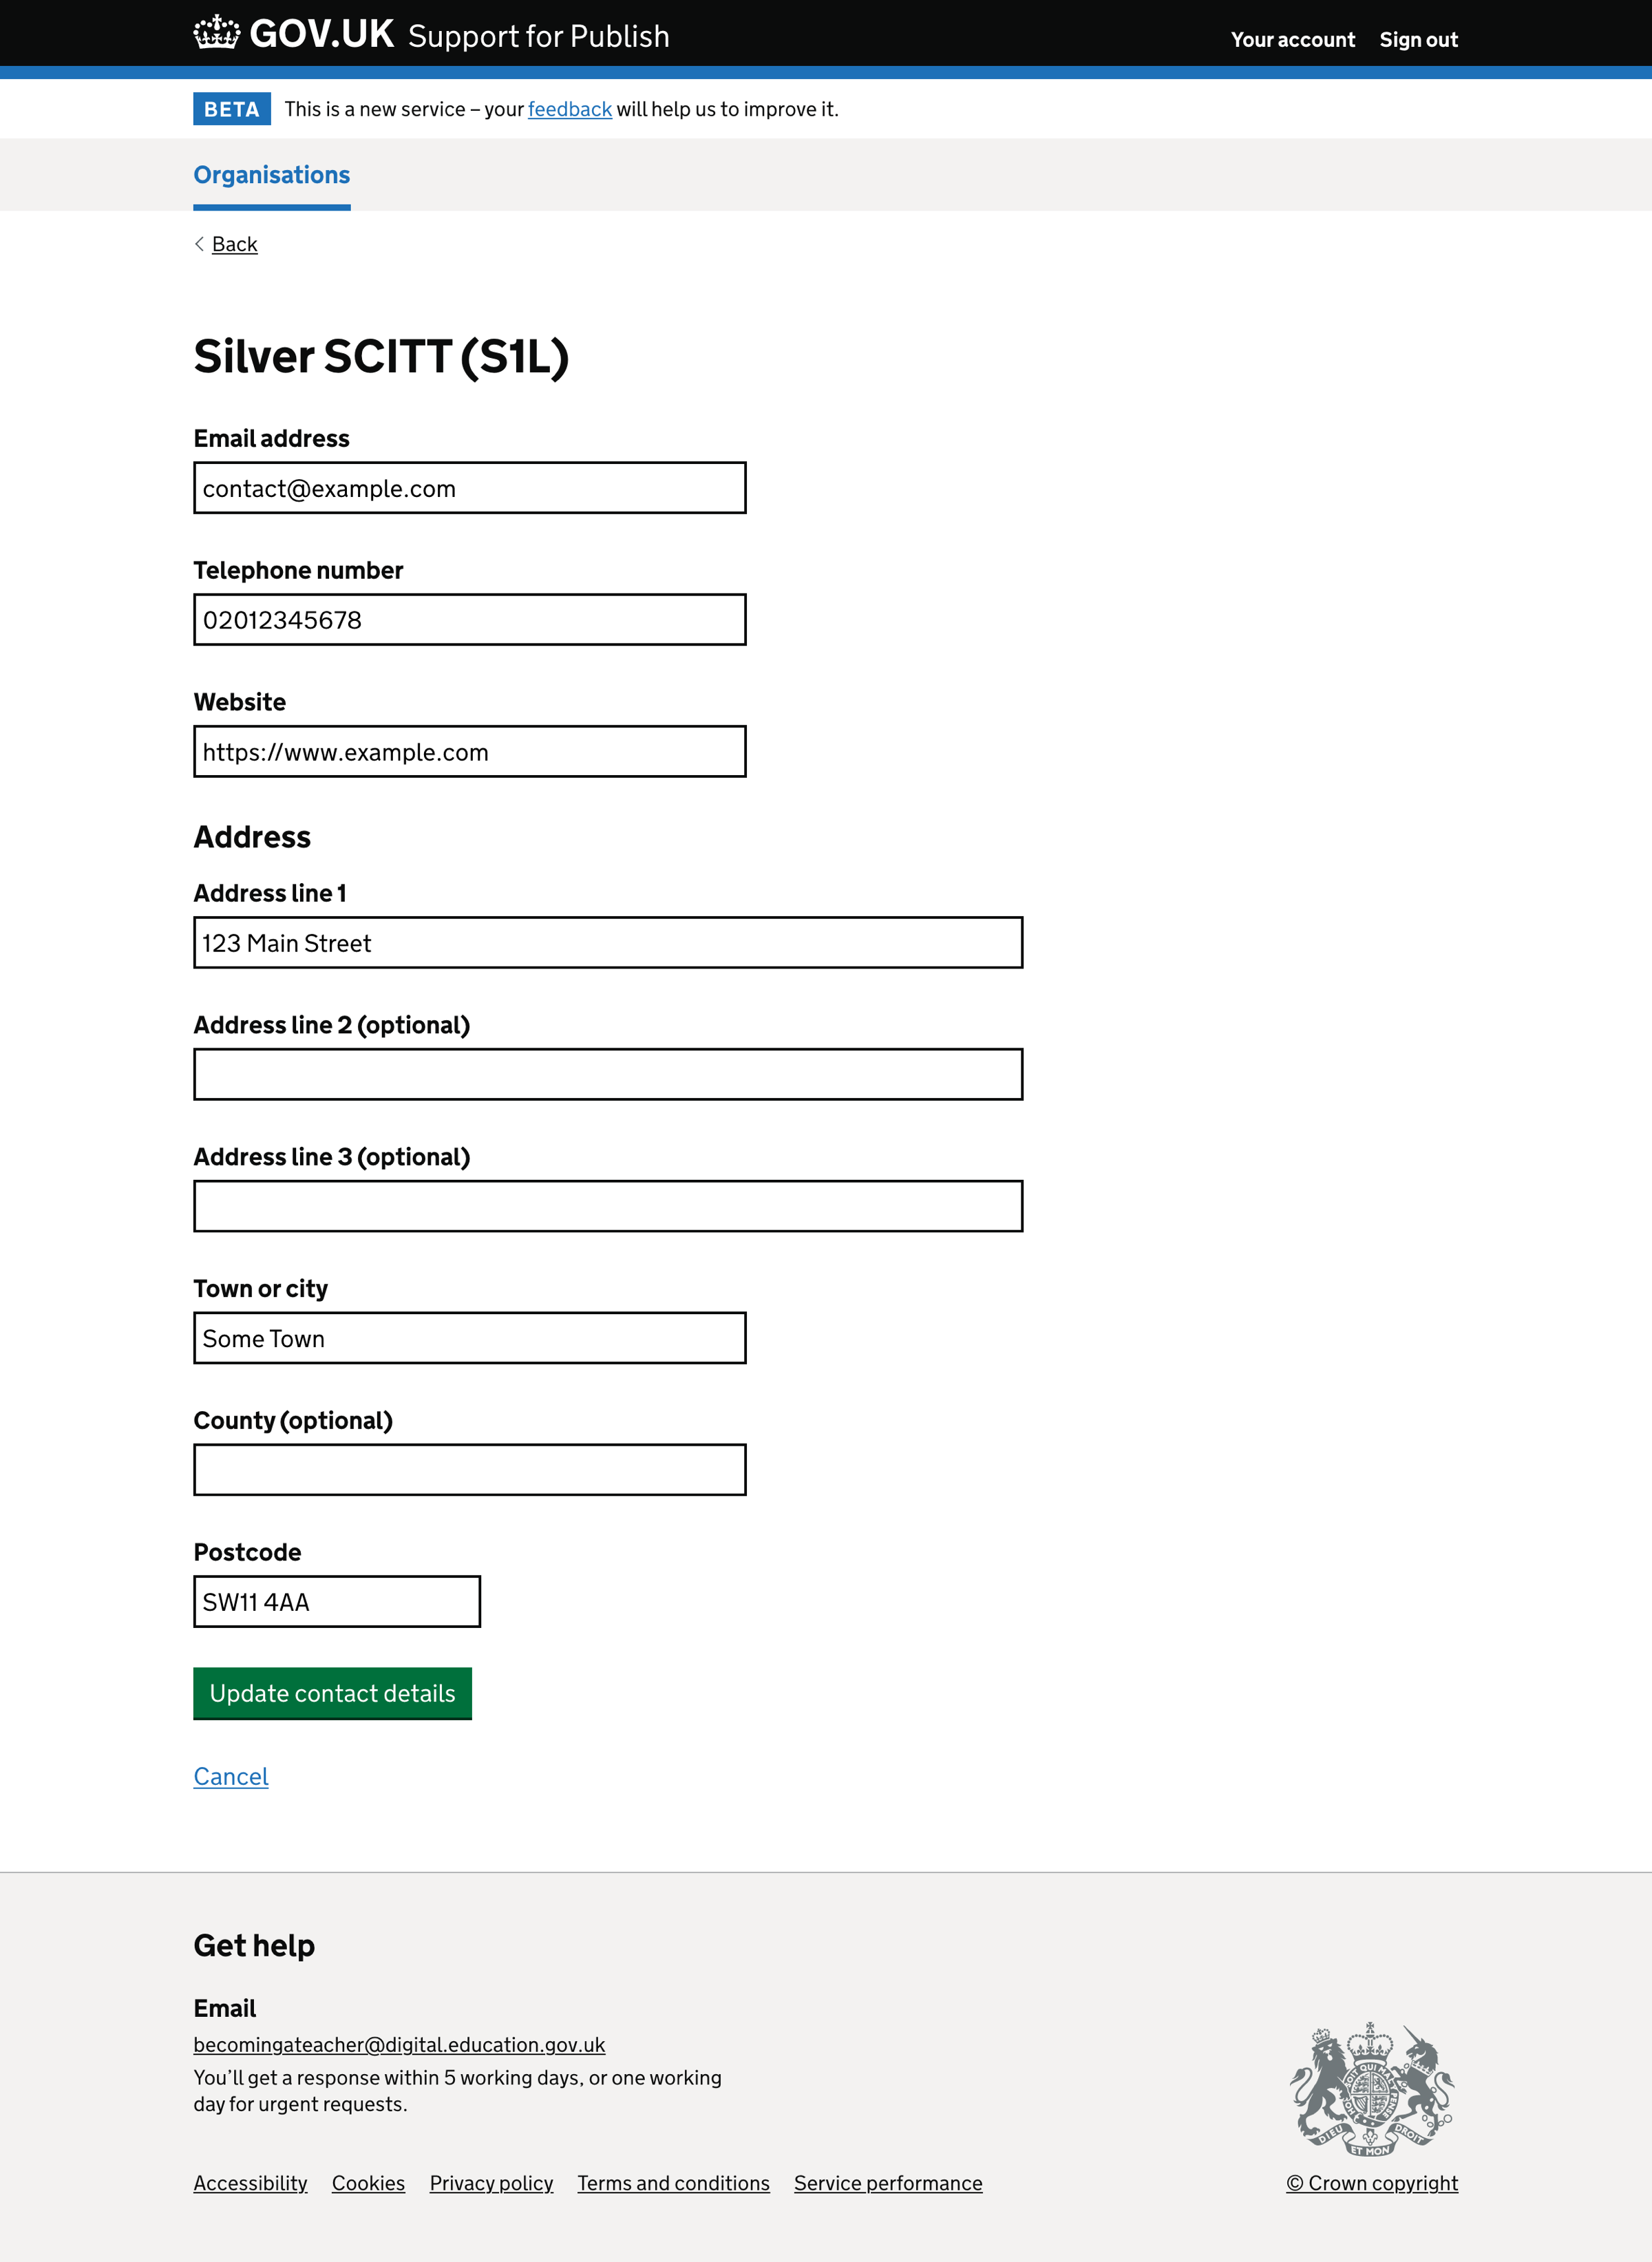 Screenshot of Edit organisation contact details